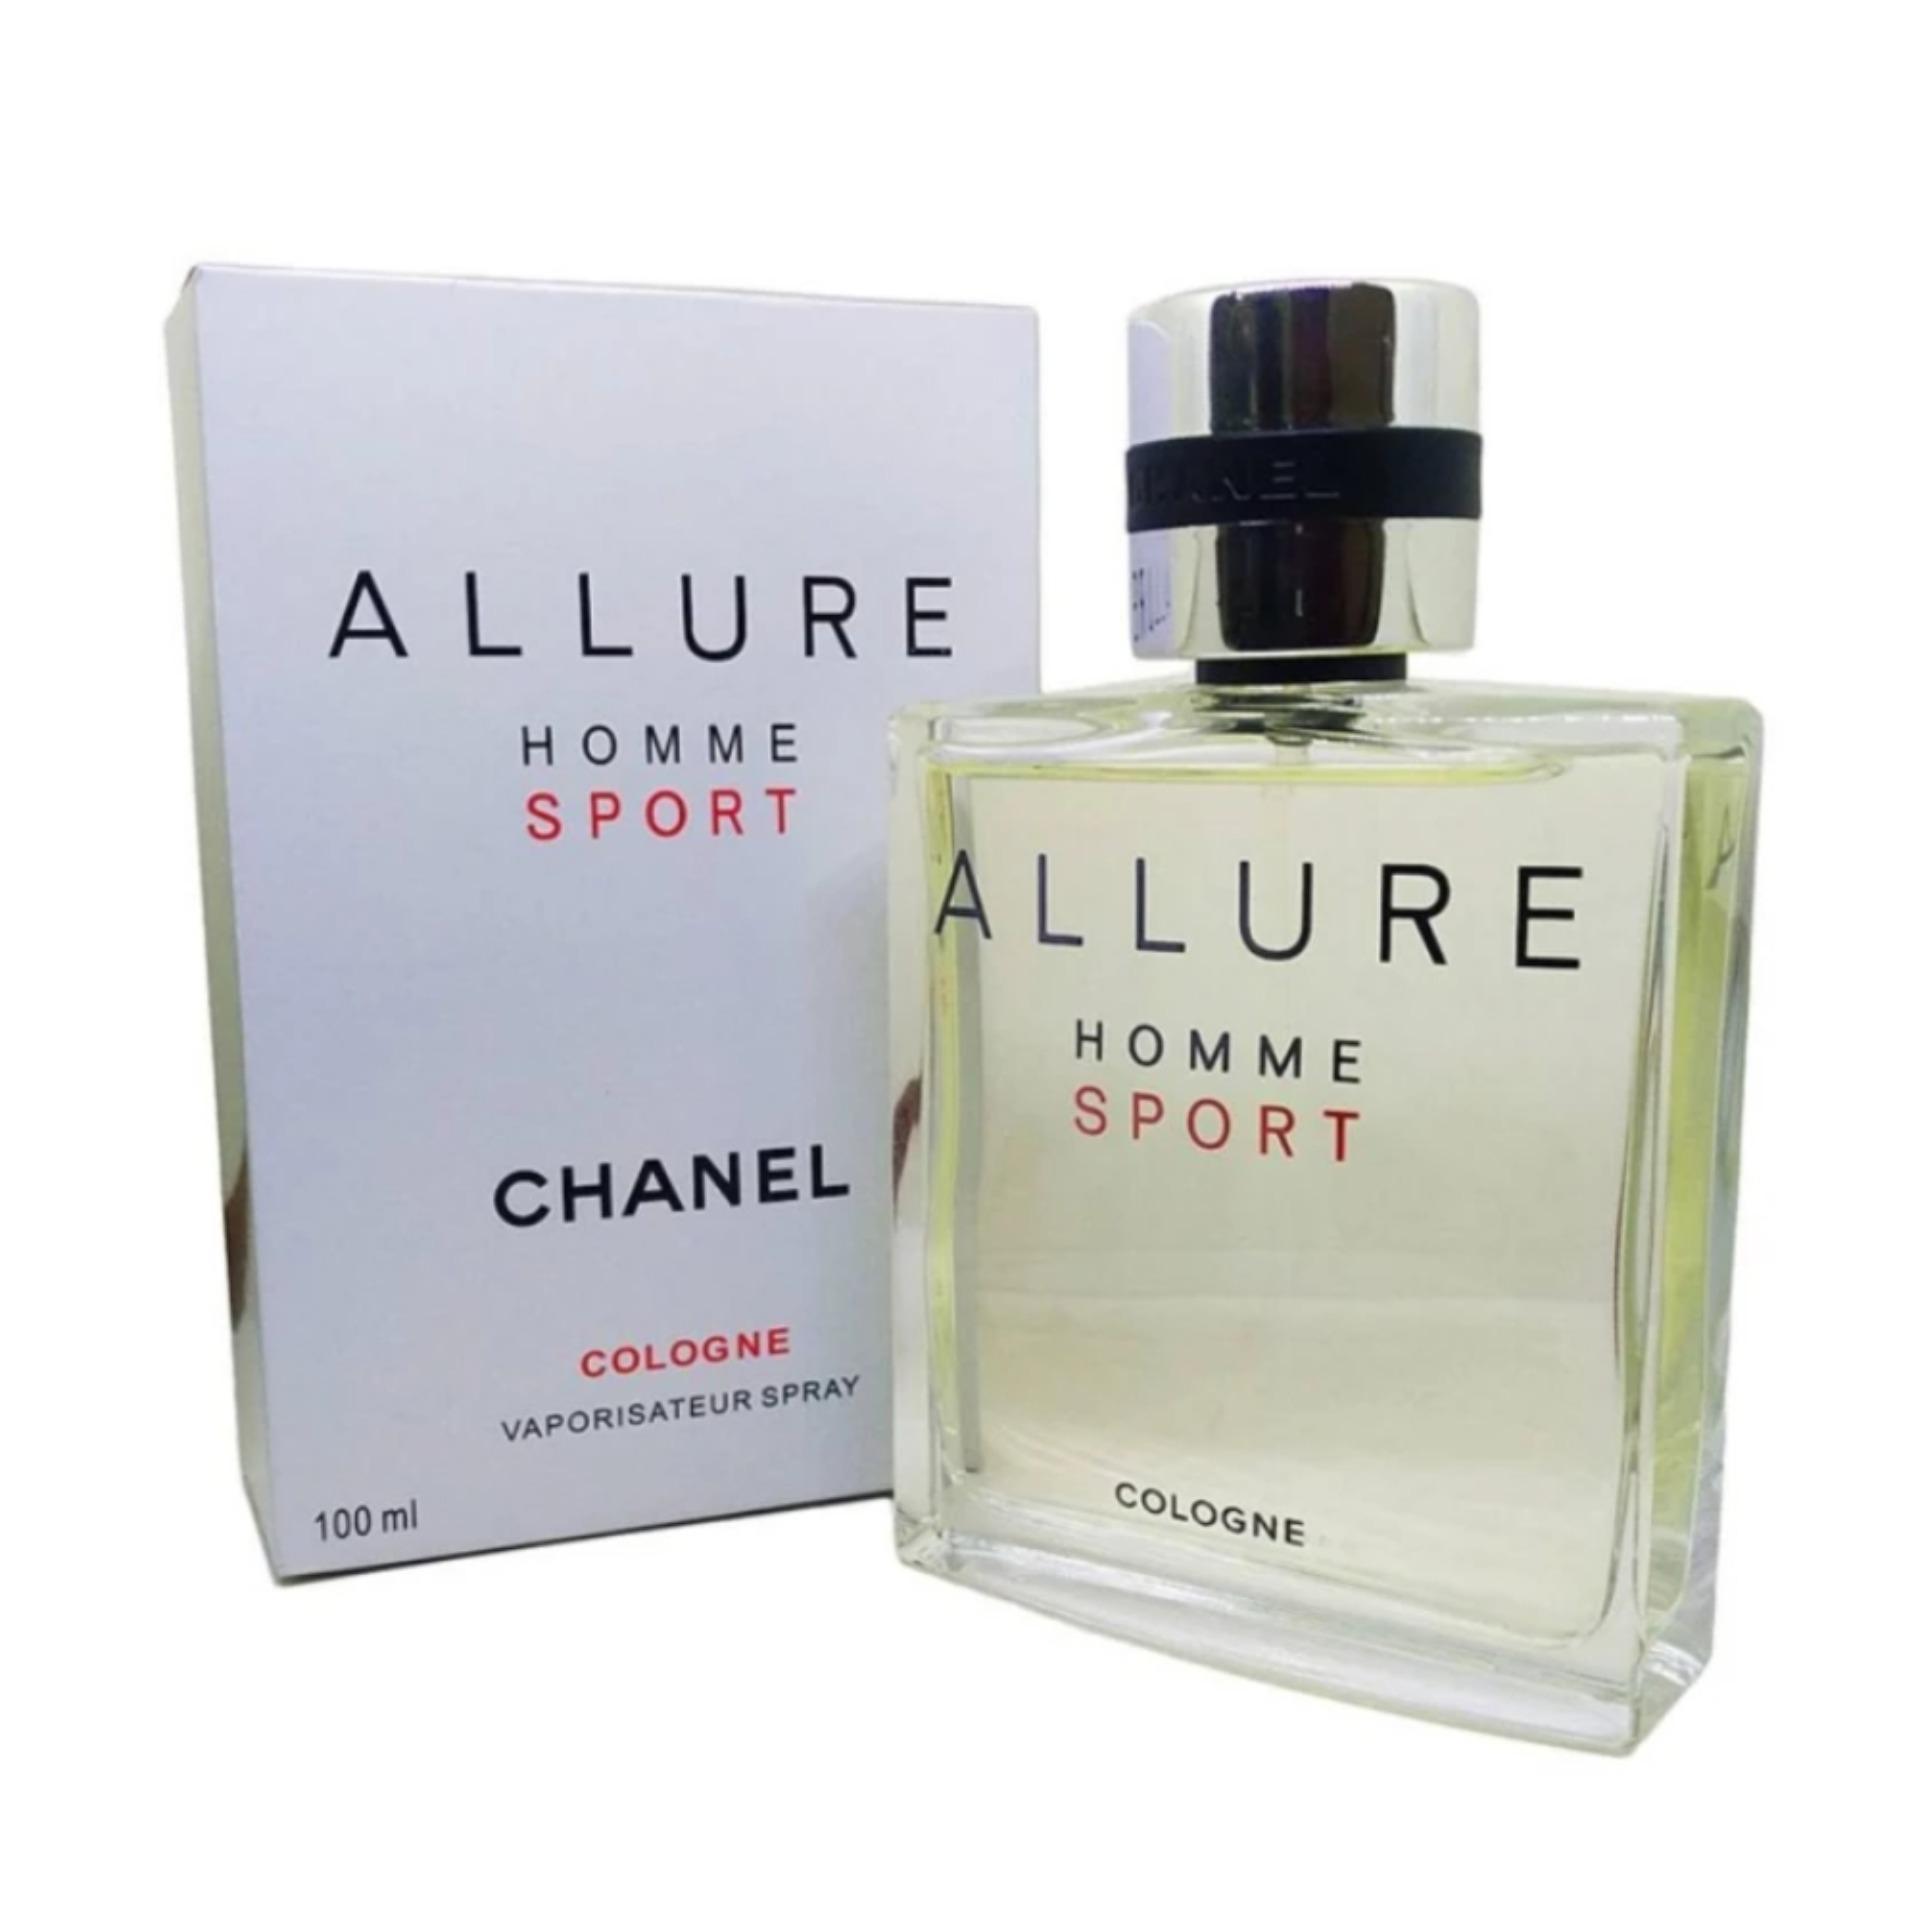 Chanel allure sport cologne. Chanel Allure homme Sport 100ml. Chanel Allure homme Sport Cologne 100 ml. Аллюр хом Шанель 100 мл. Chanel Allure homme Sport.